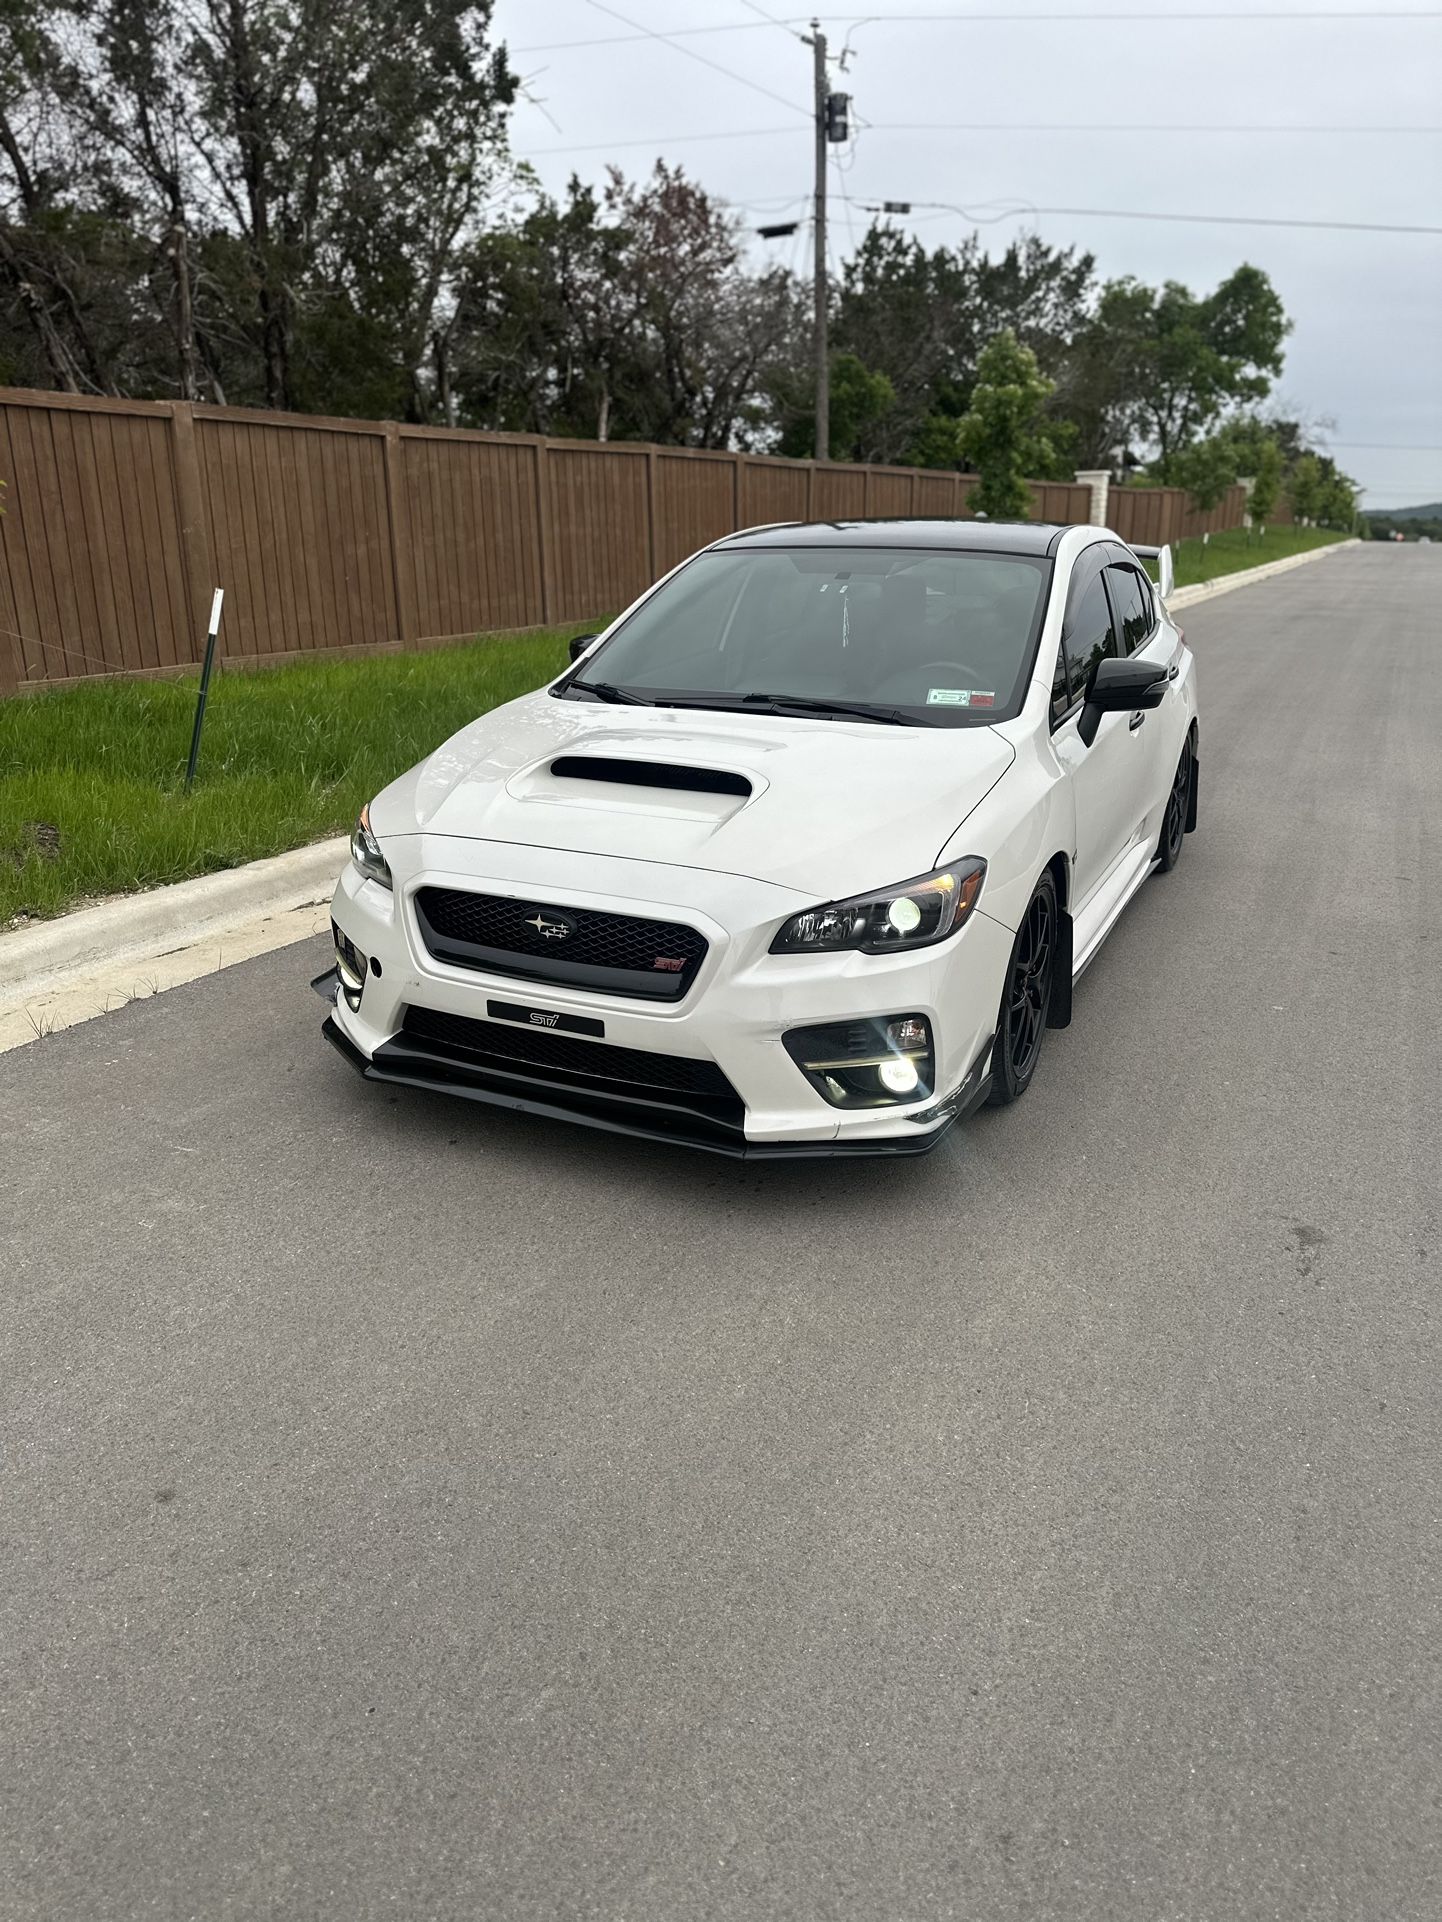 2016 Subaru WRX